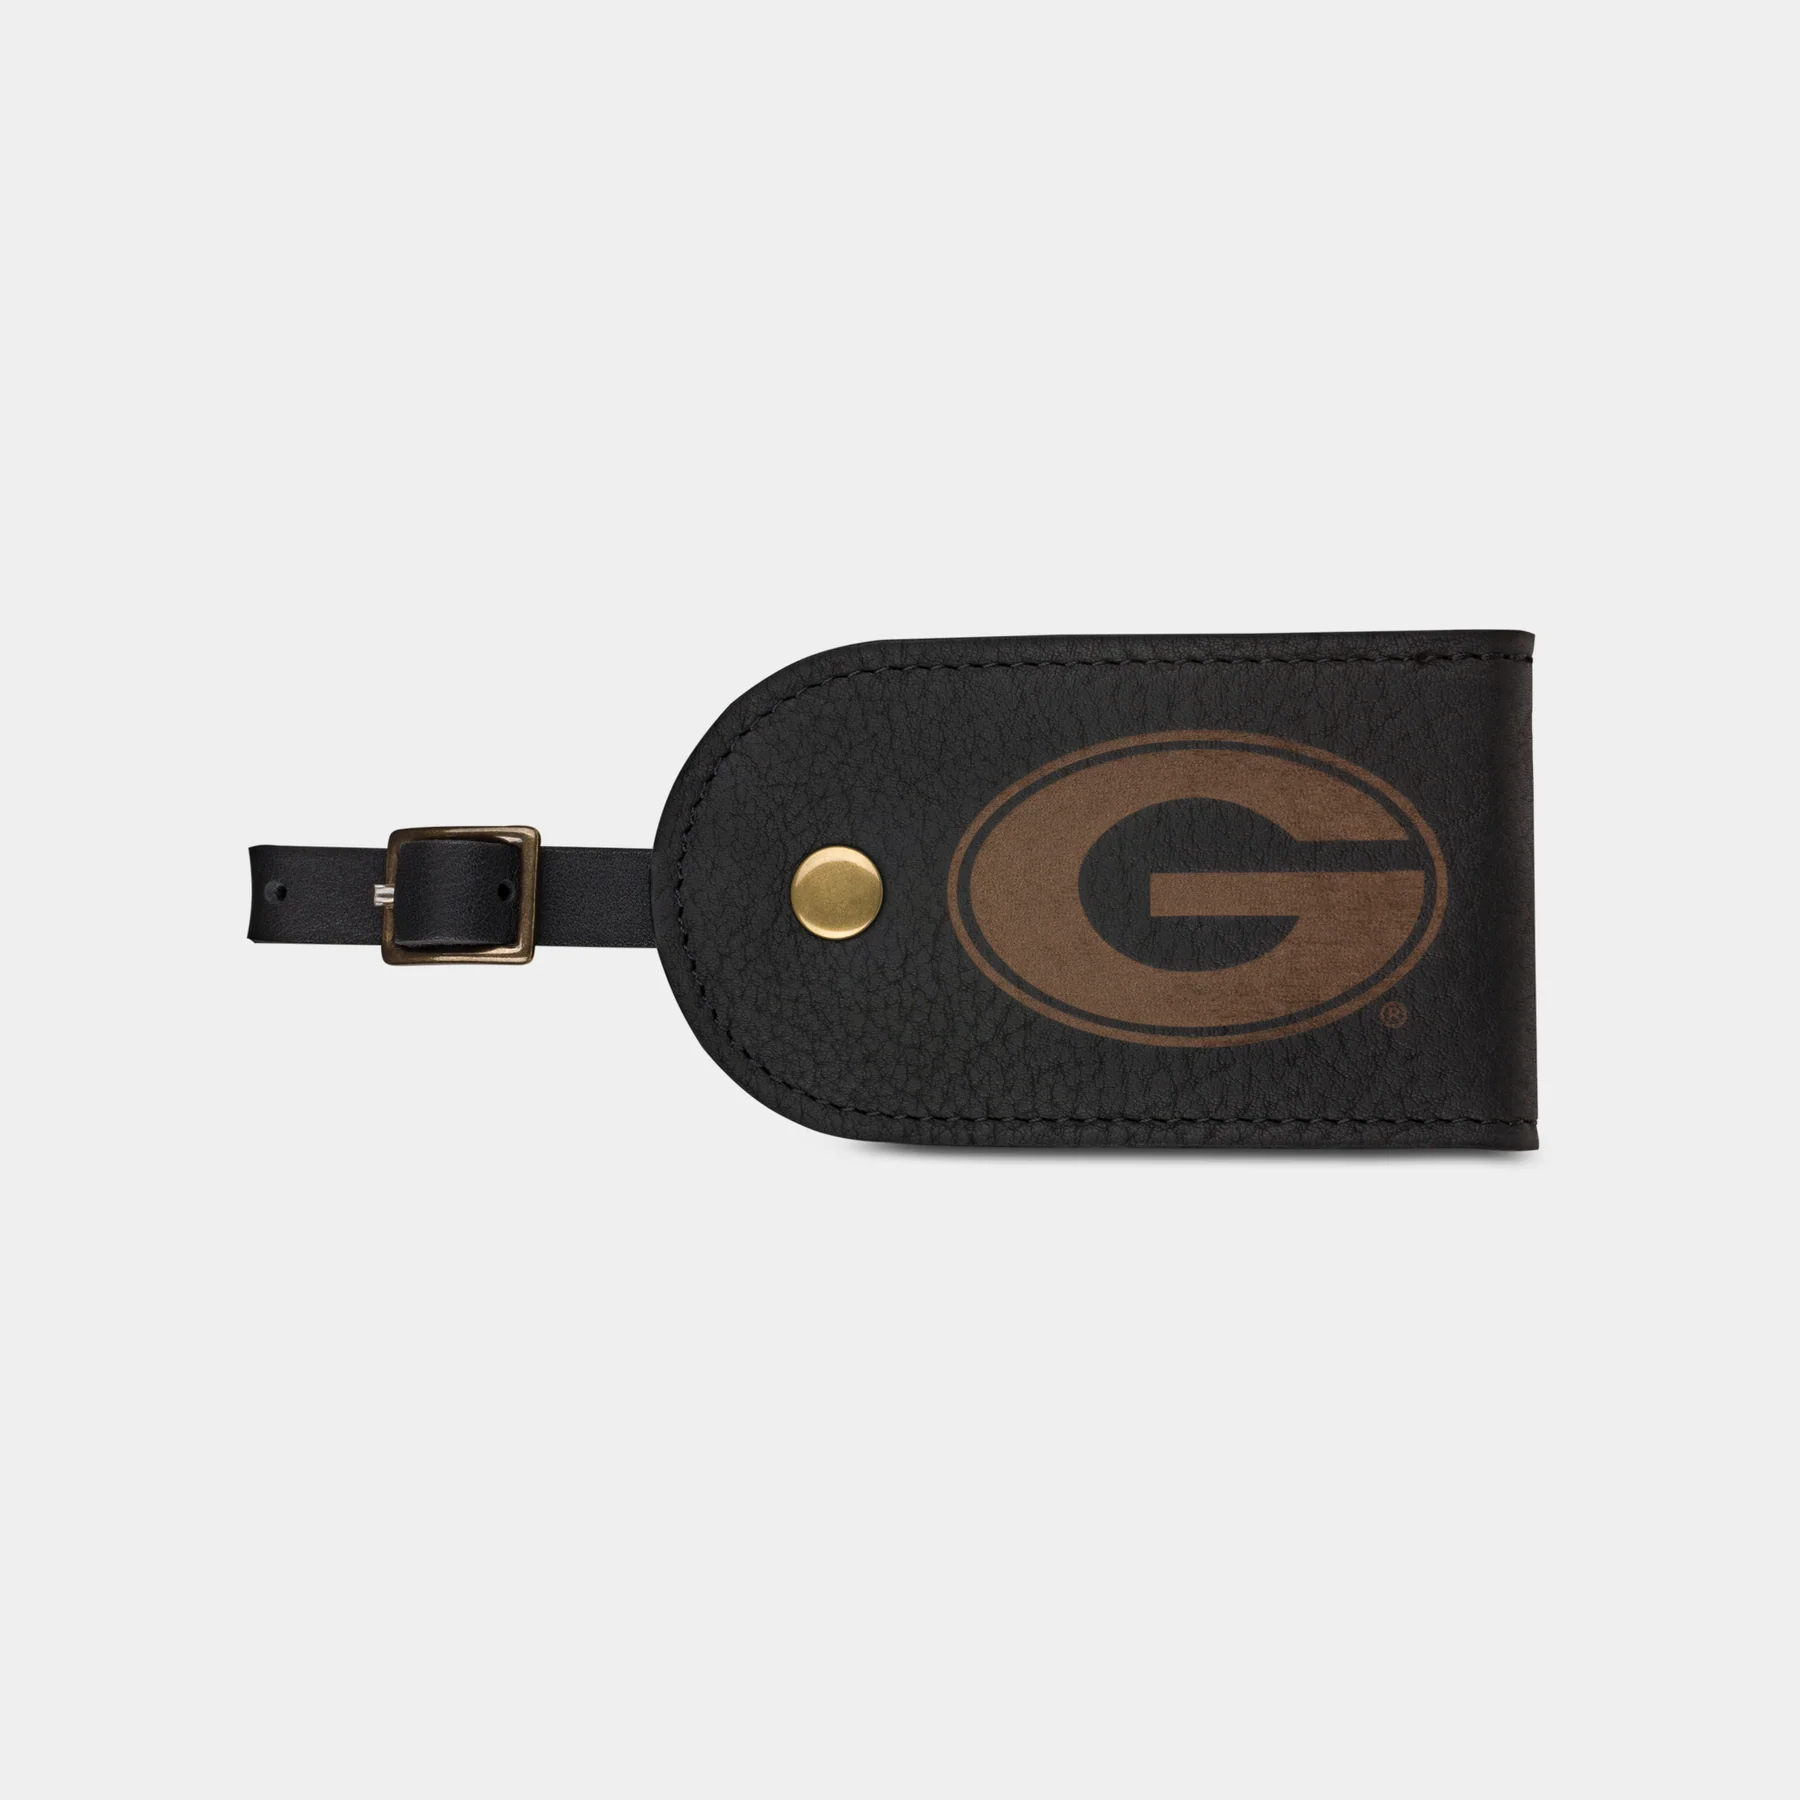 UGA "G" Leather Luggage Tag in Black